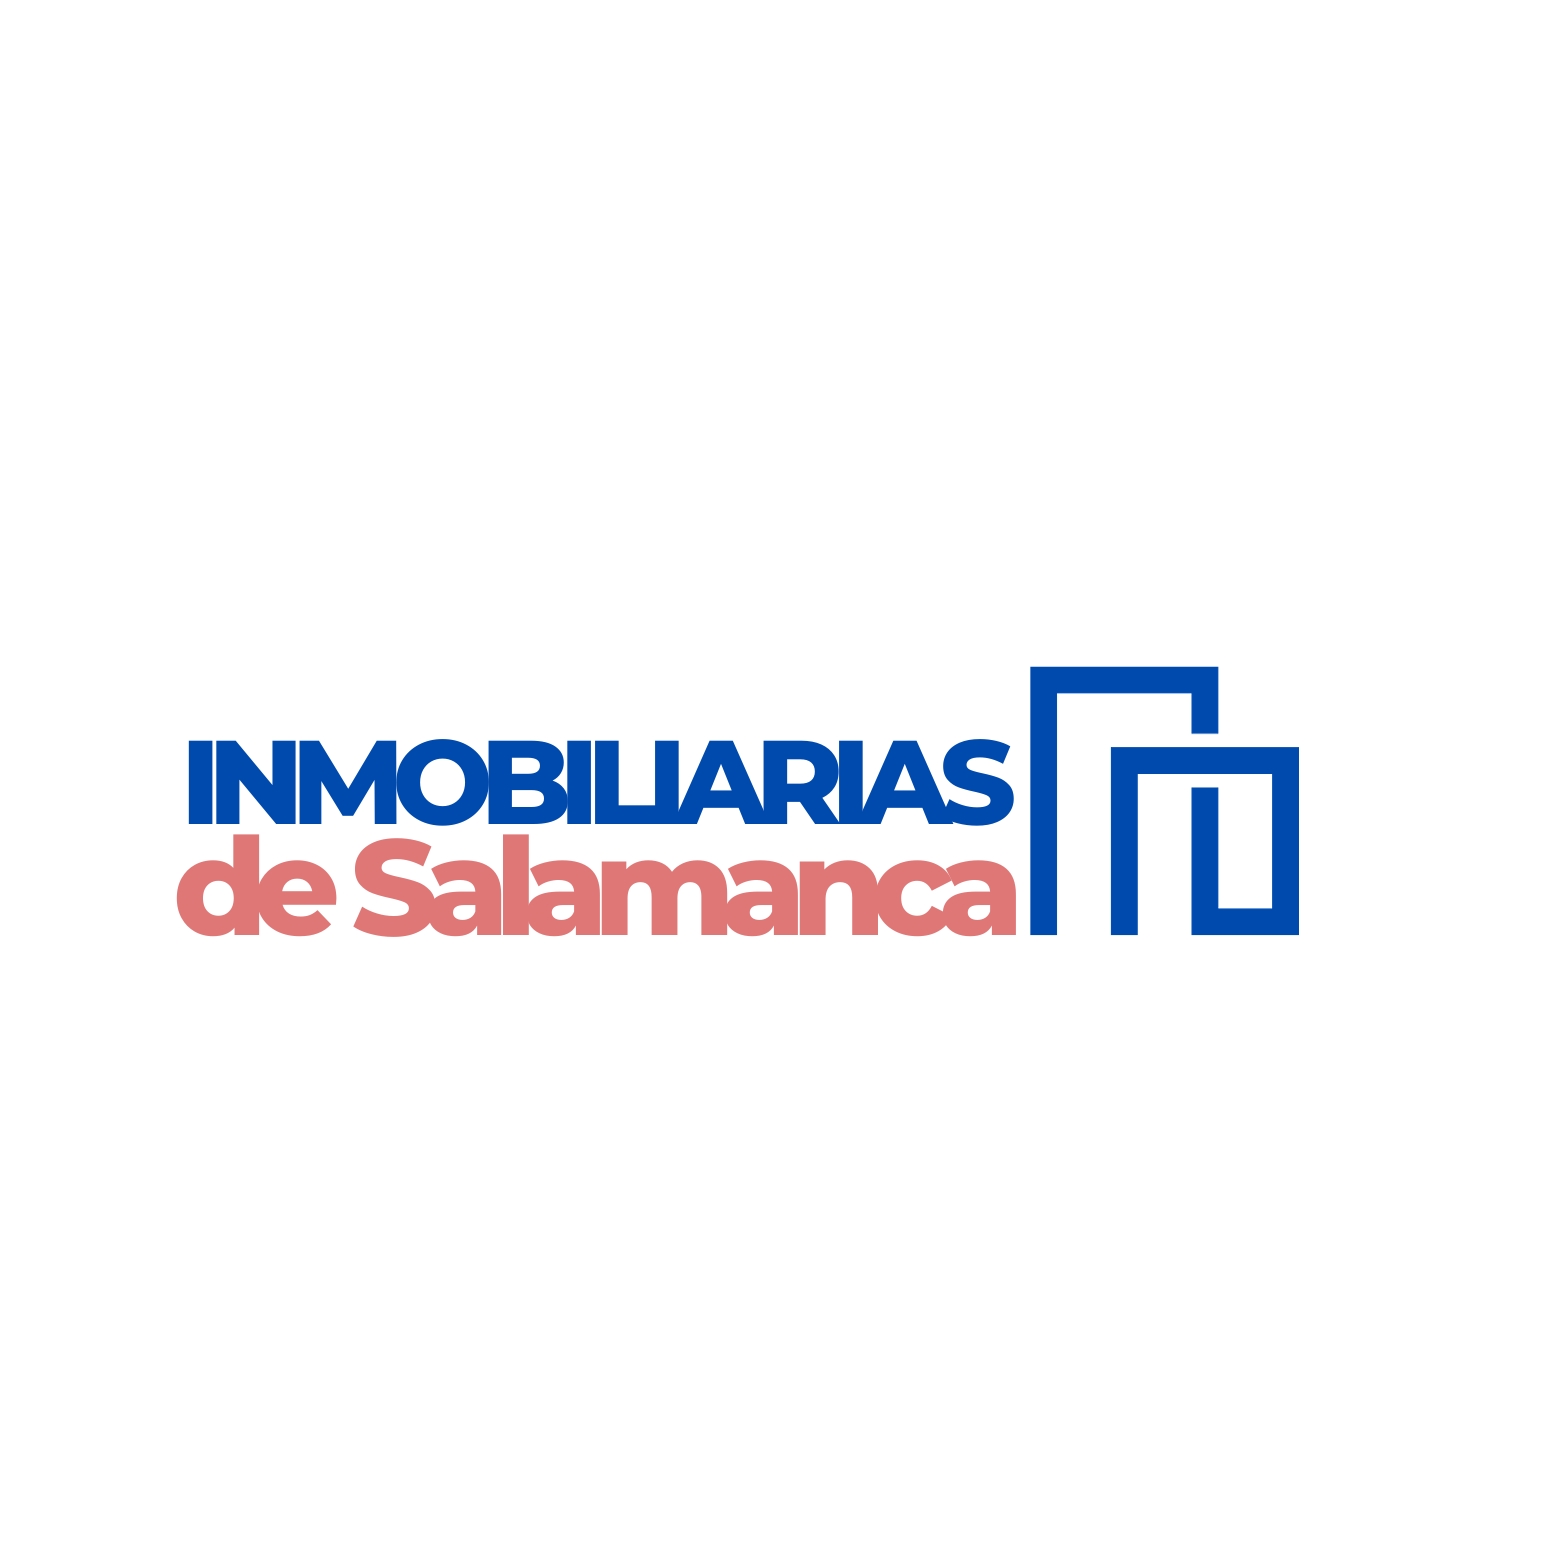 Asociación de Inmobiliarias de Salamanca